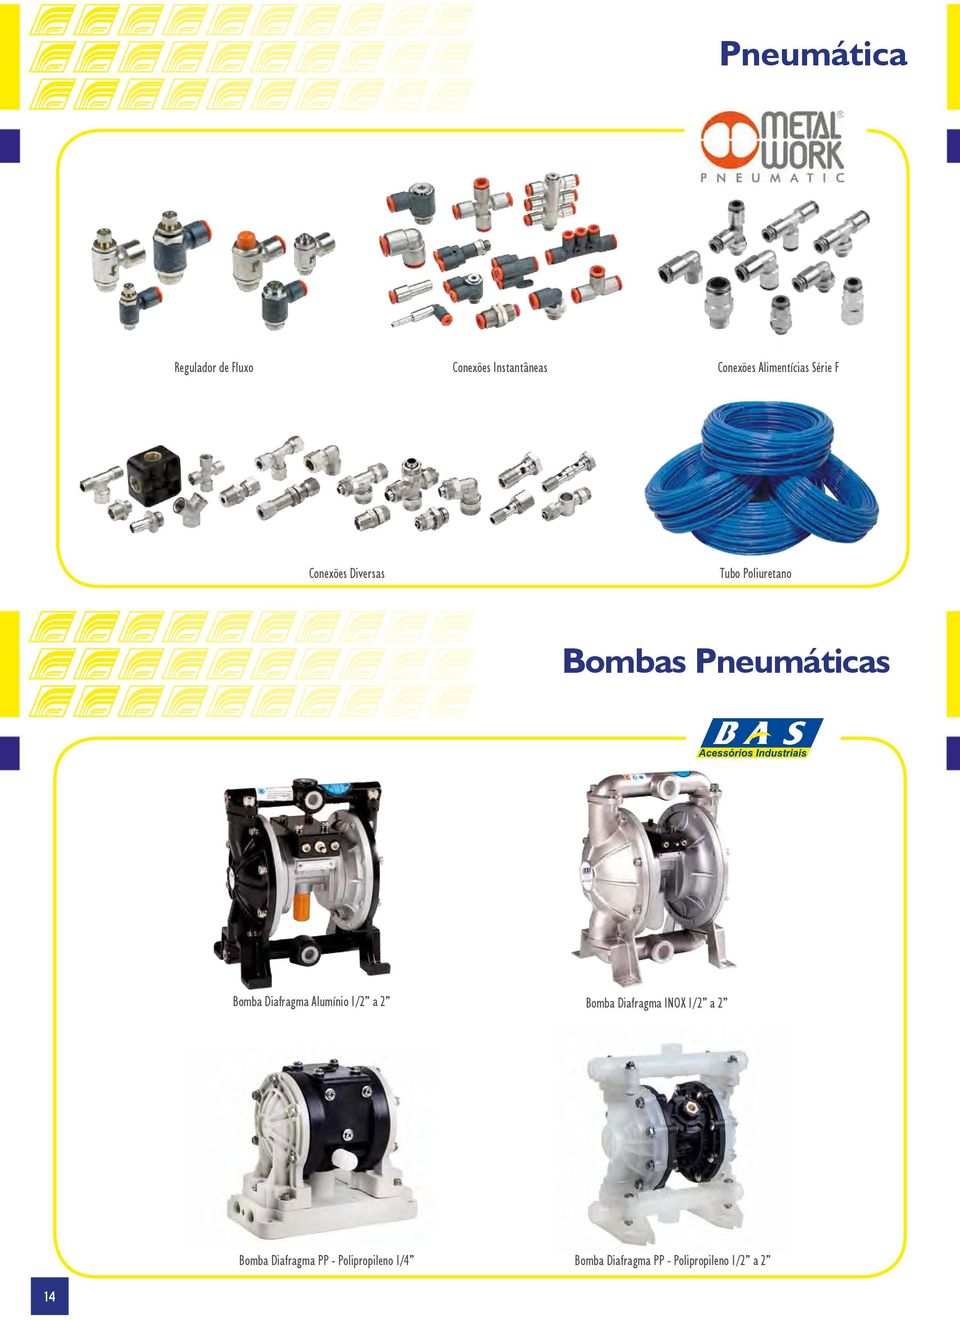 Pneumáticas Bomba Diafragma Alumínio 1/2 a 2 Bomba Diafragma INOX 1/2